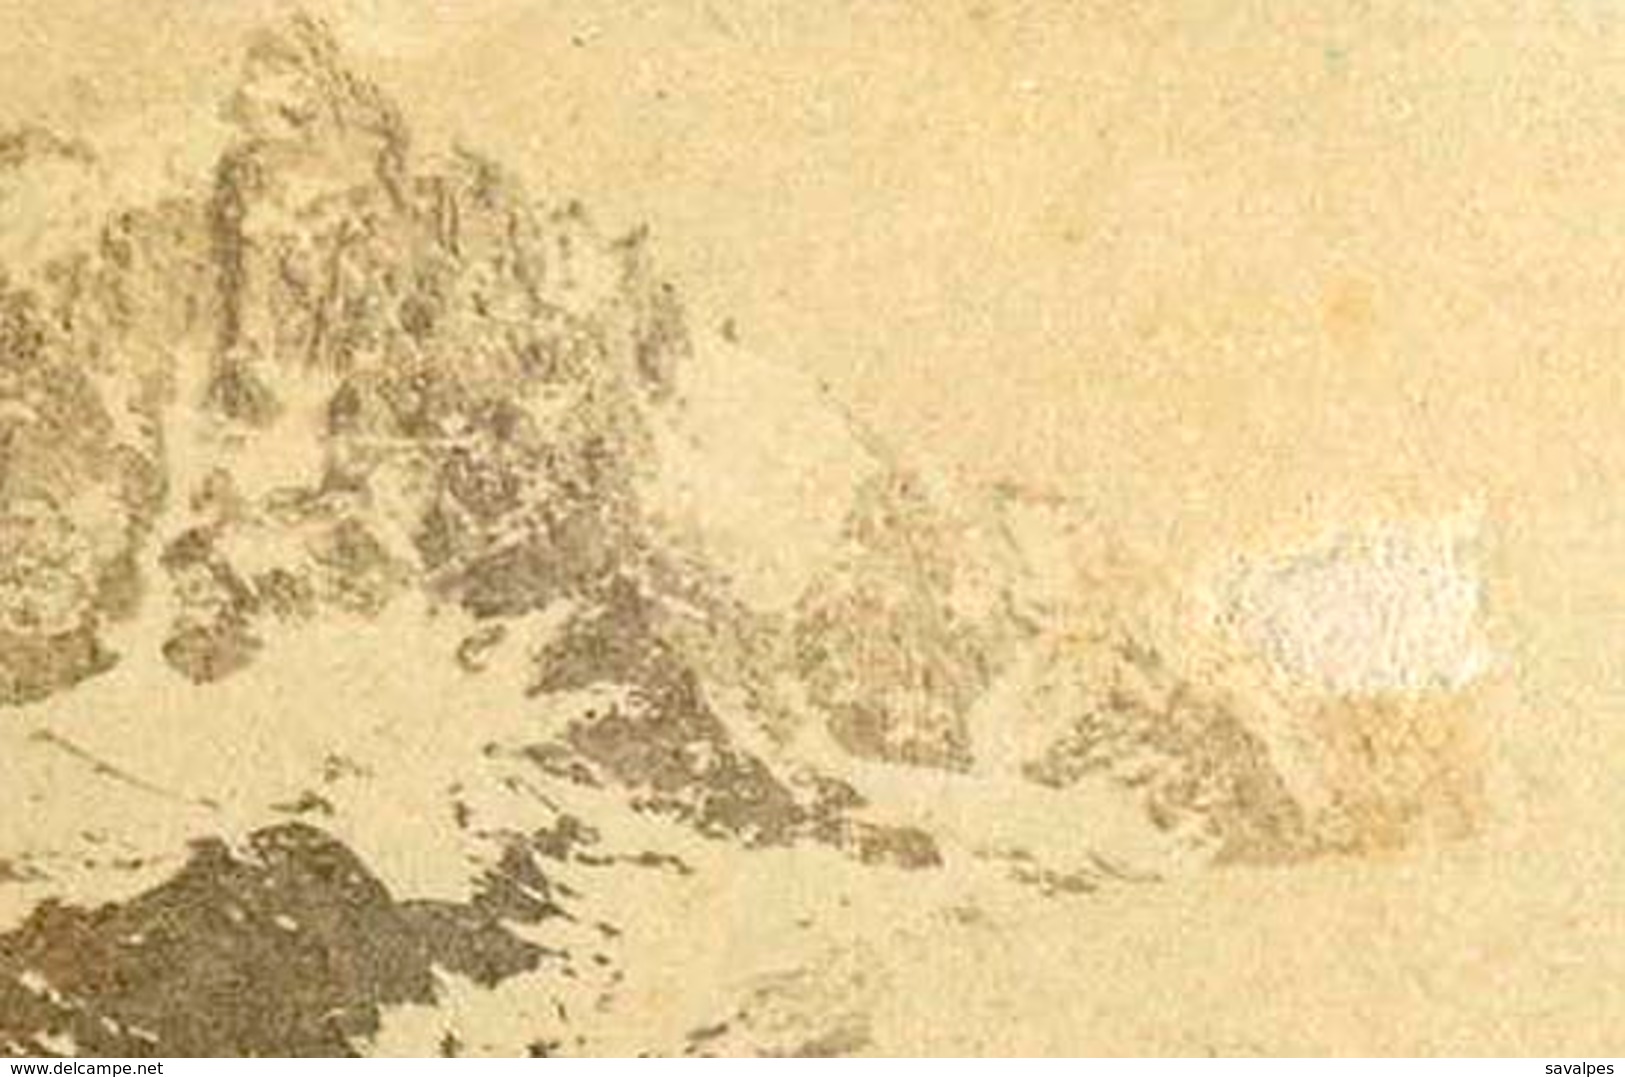 Chamonix Vers 1866 * Les Pèlerins, Glacier Des Bossons * CDV 6 X 8,5cm Photo Albumine - Anciennes (Av. 1900)